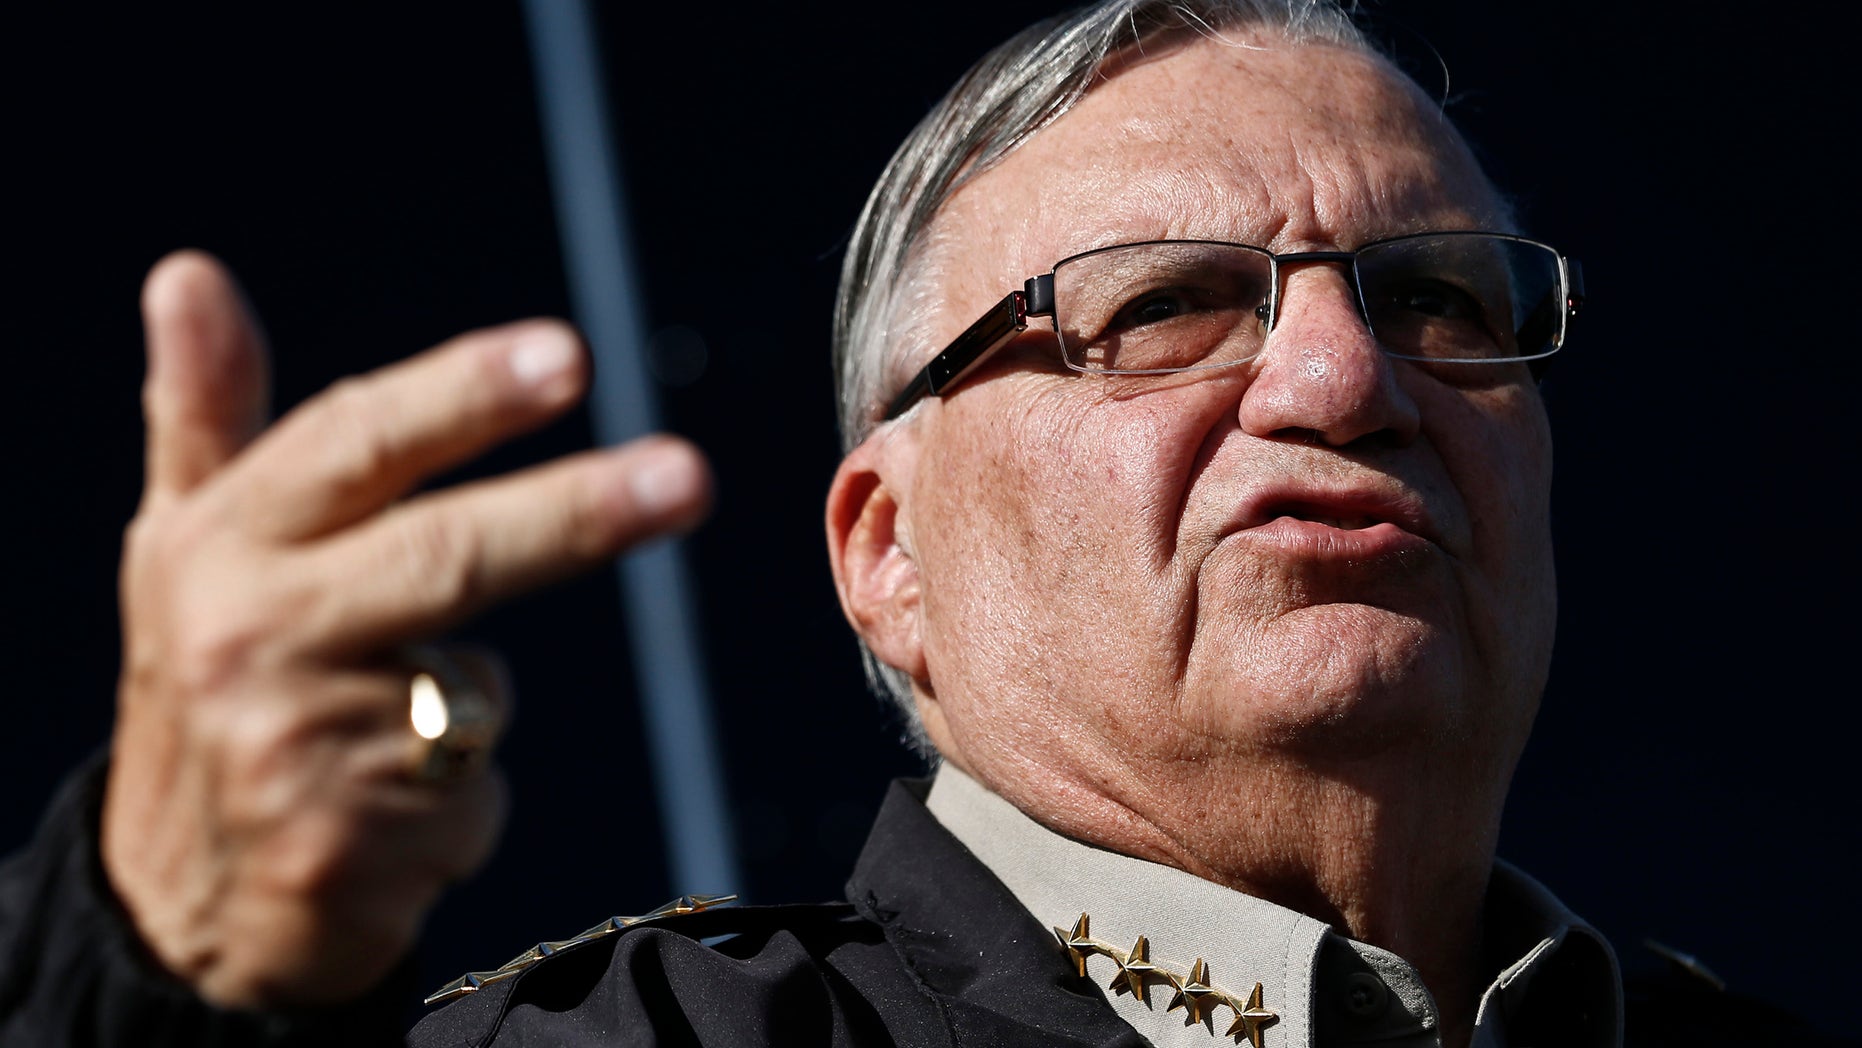 Arizona Sheriff Arpaio Faces Toughest Campaign Challenge Yet Amid 